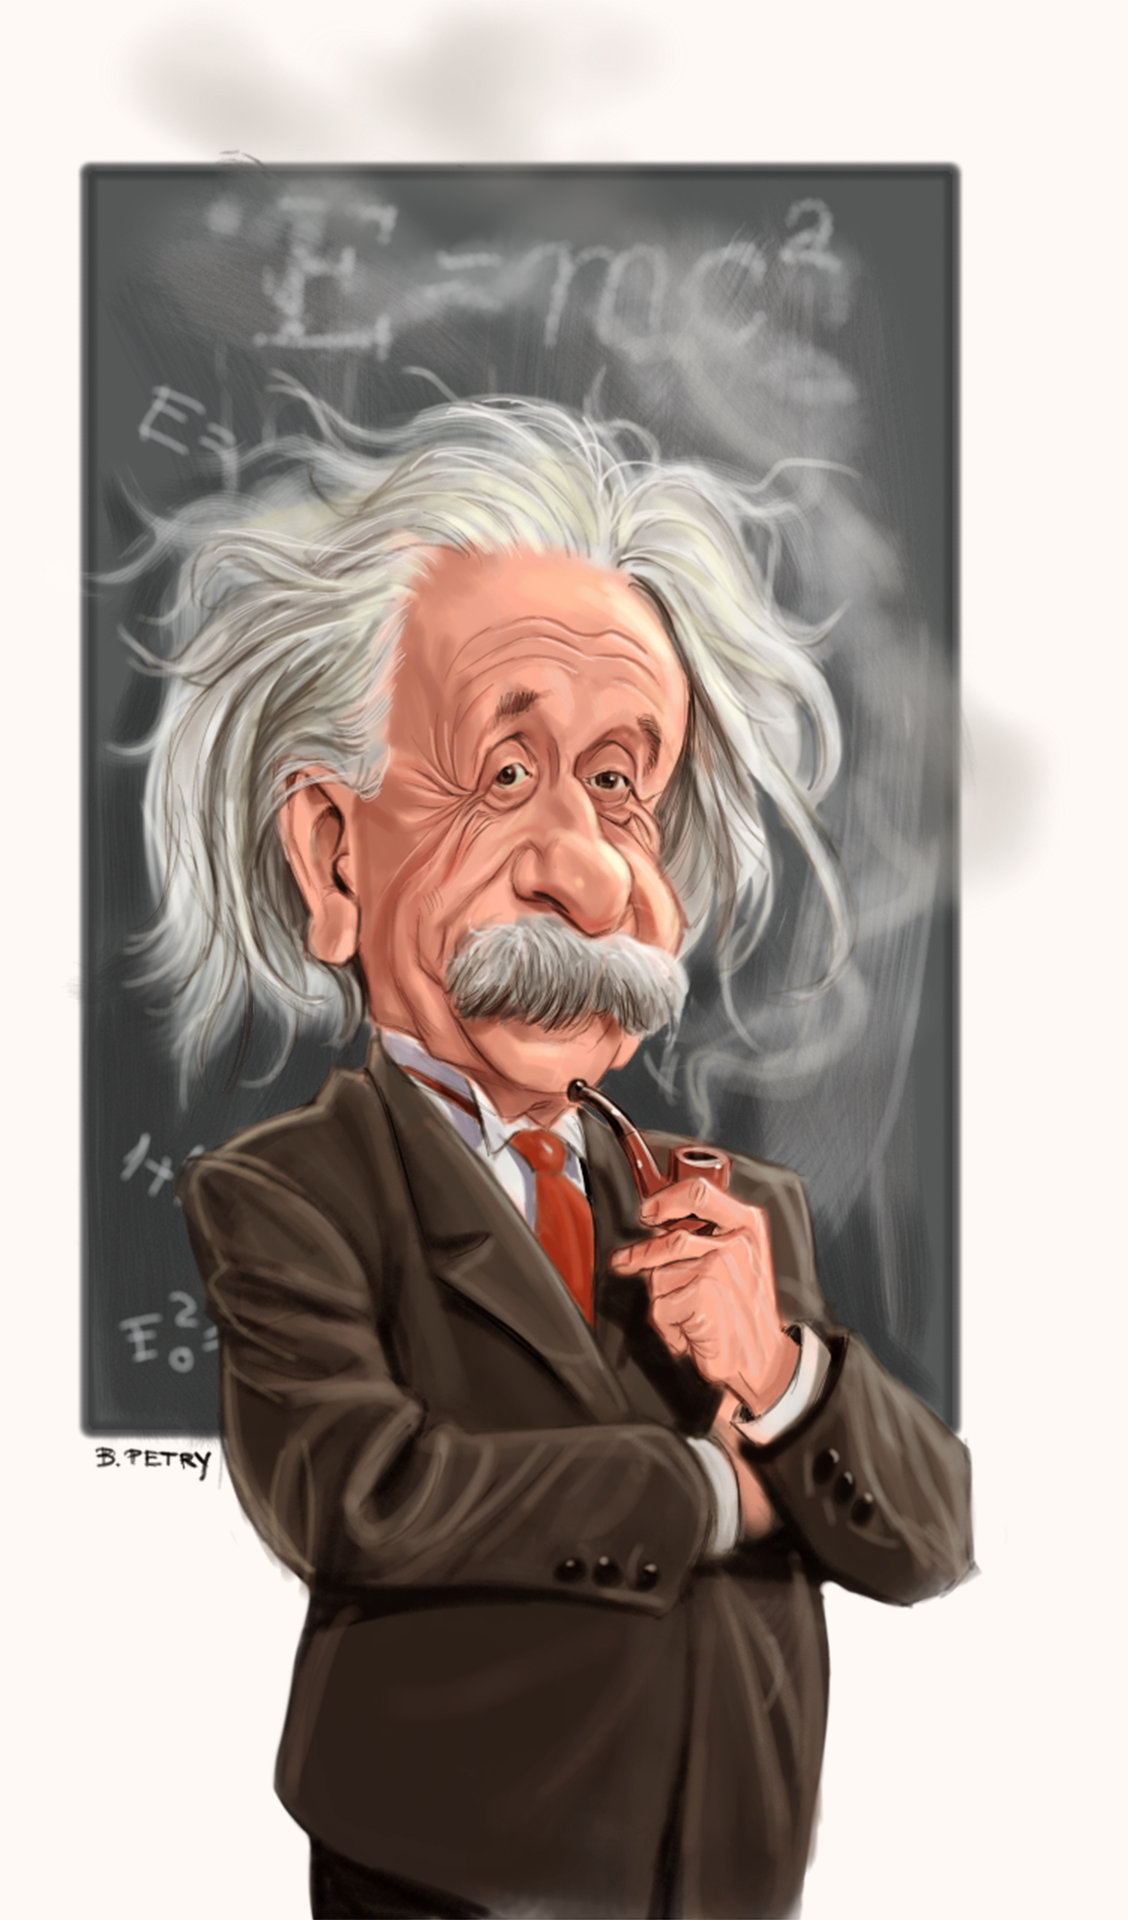 Petry Caricatures - Albert Einstein